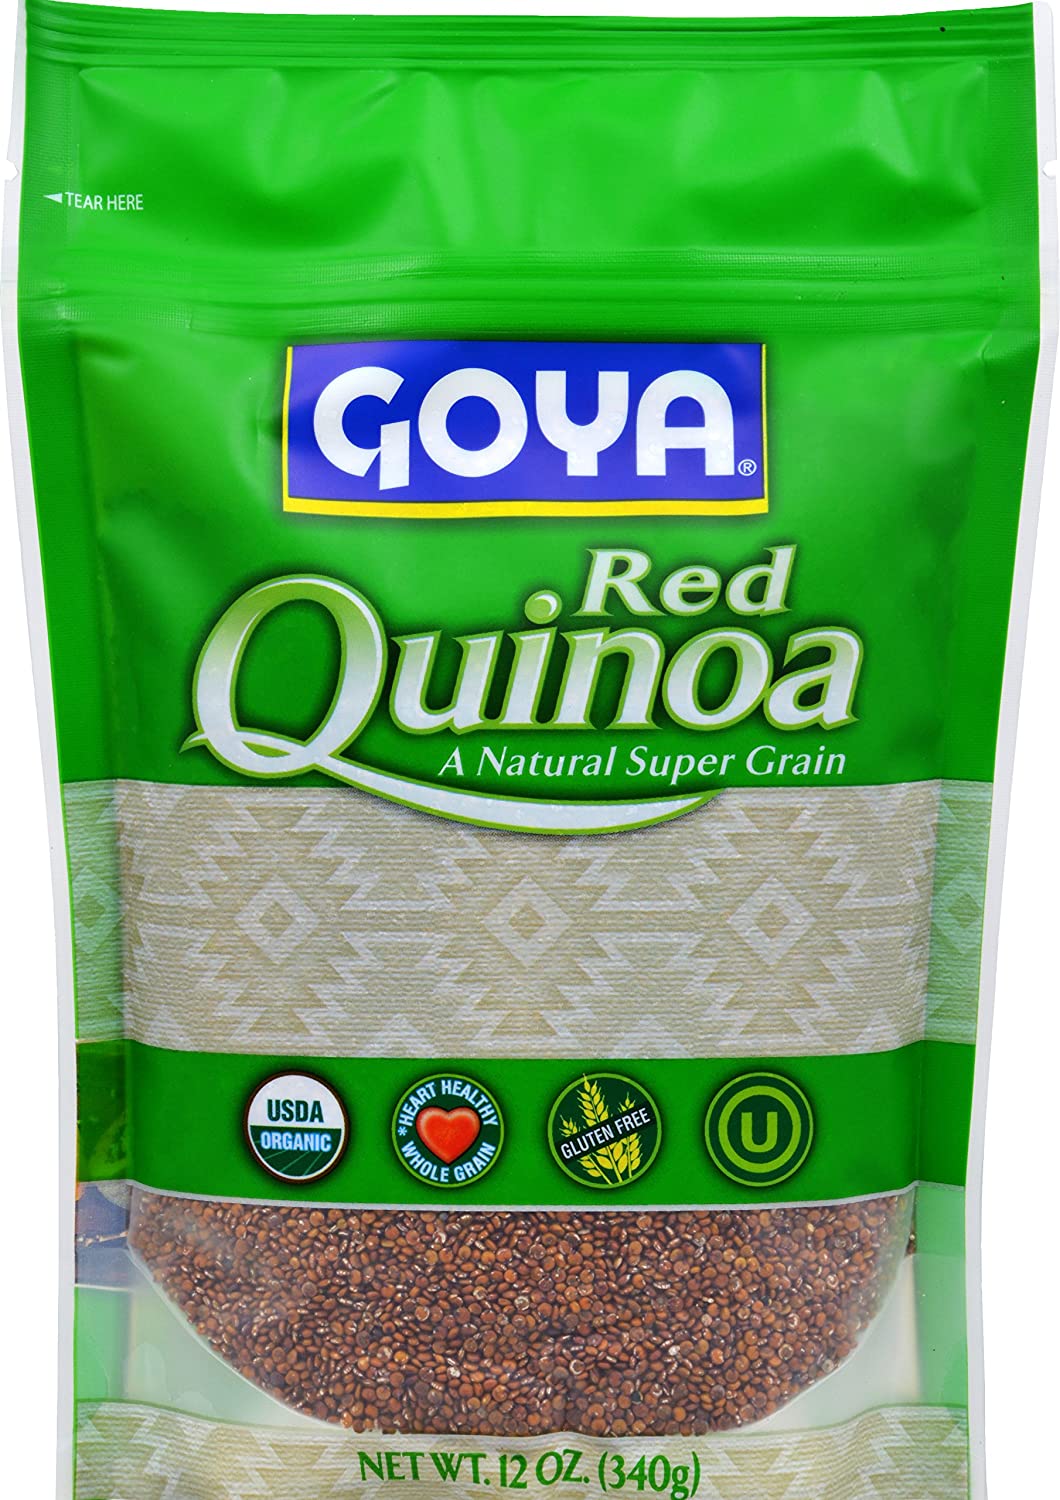 Goya Organic Red Quinoa 12 oz